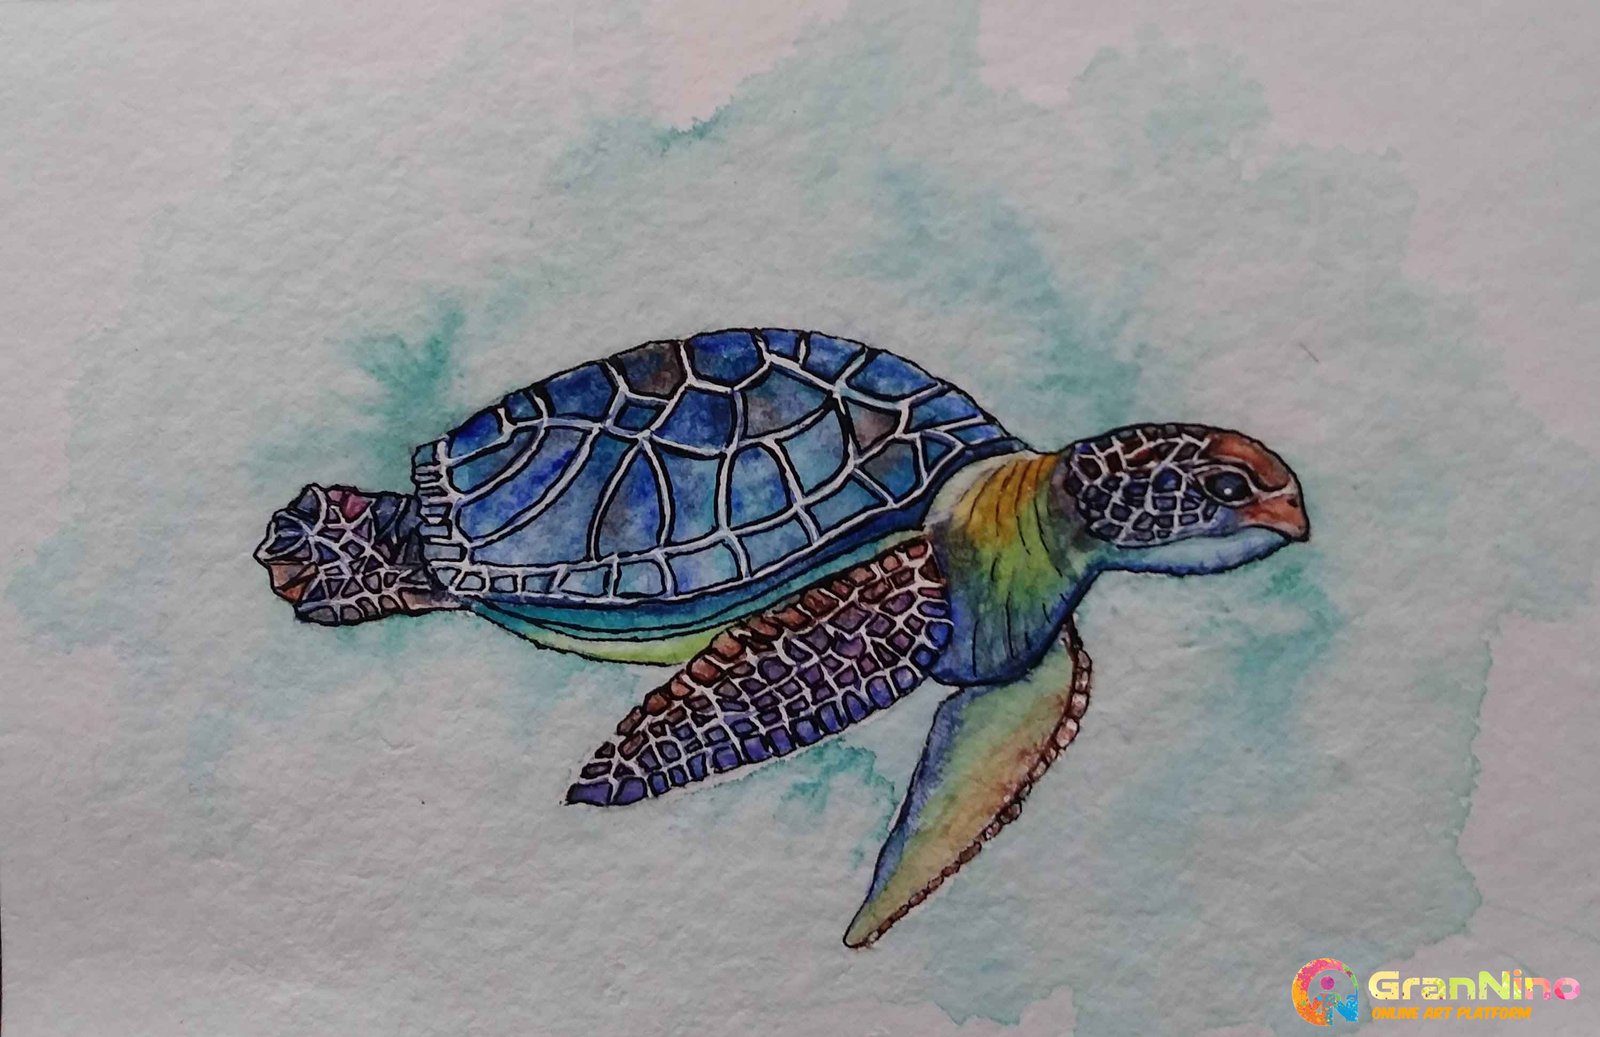 Emma Korhonen - Art - Pinta Island Tortoise (extinct 2012) [Colour pencil  and pen] #art #drawing #illustration #extinct #tortoise #galapagos |  Facebook